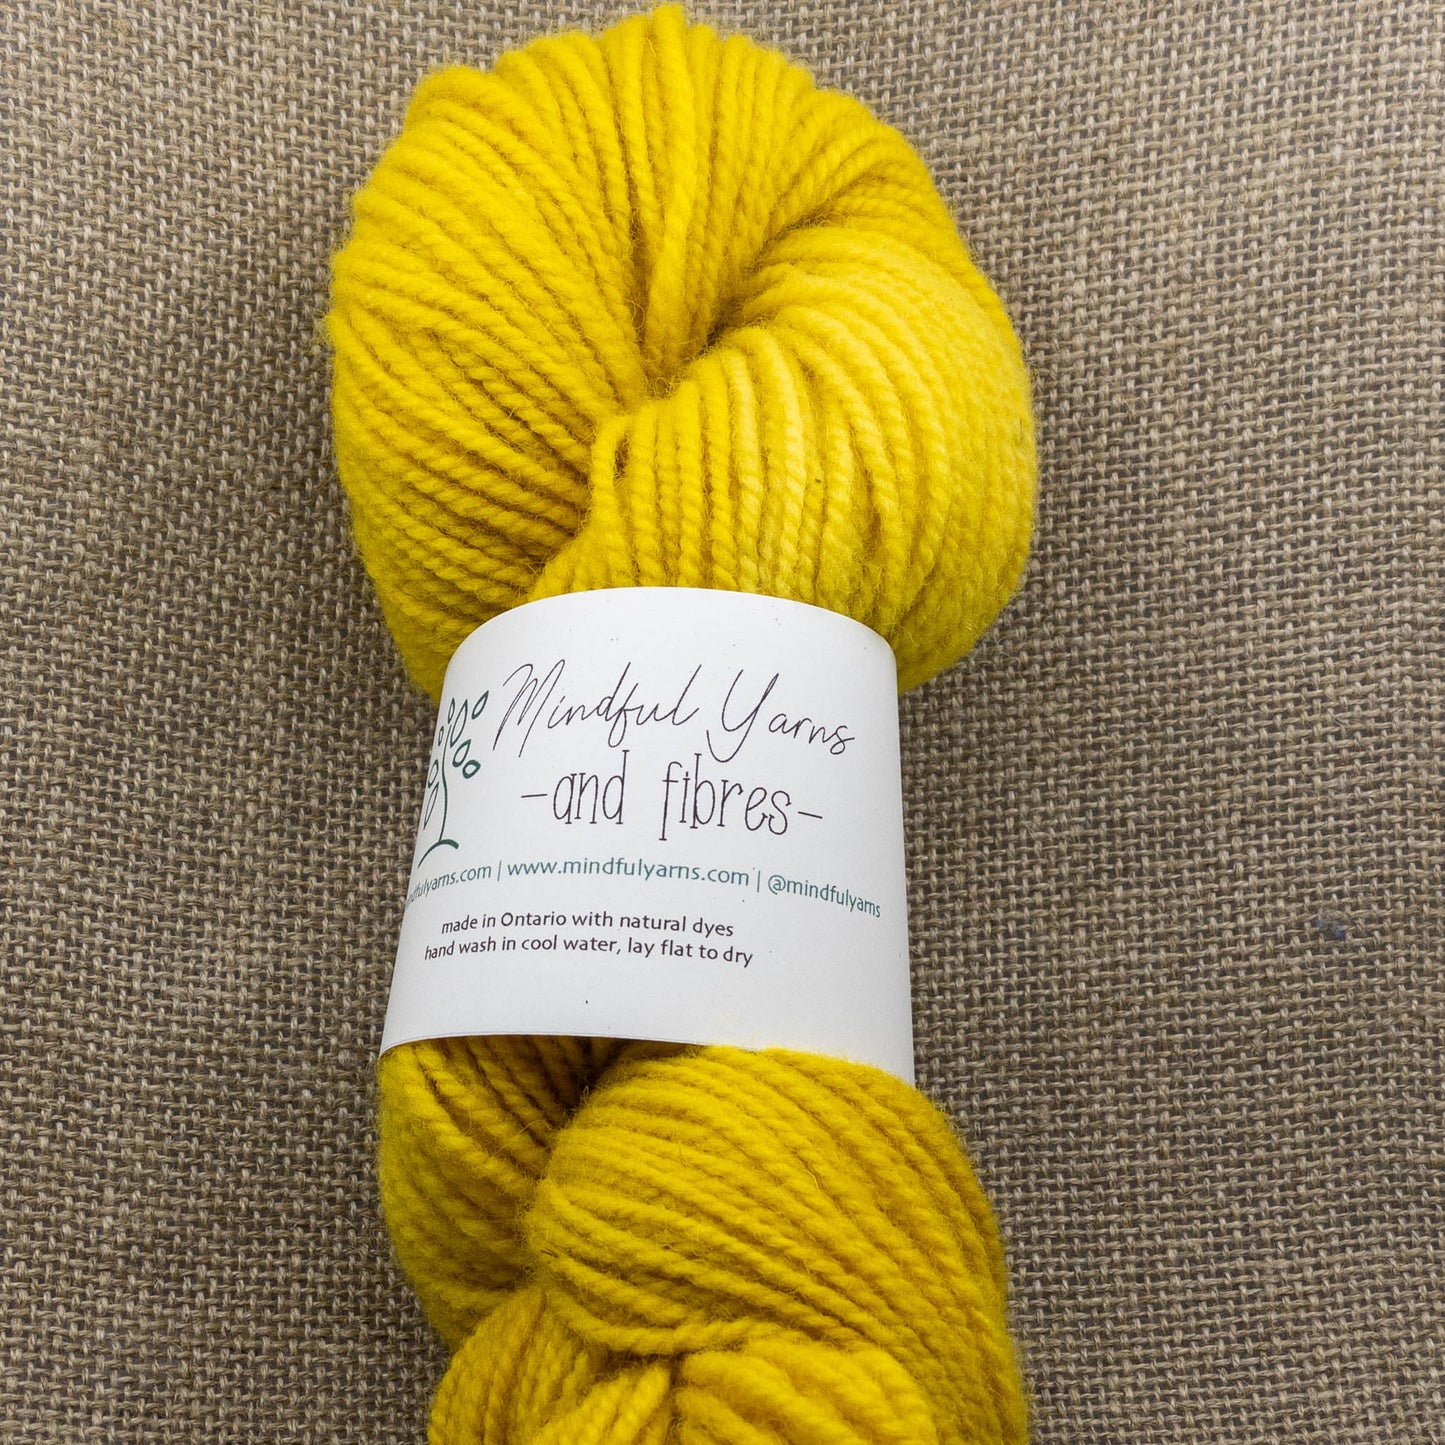 Ontario Dorset Wool - worsted weight - Mindful Yarns - Marigold X-0410